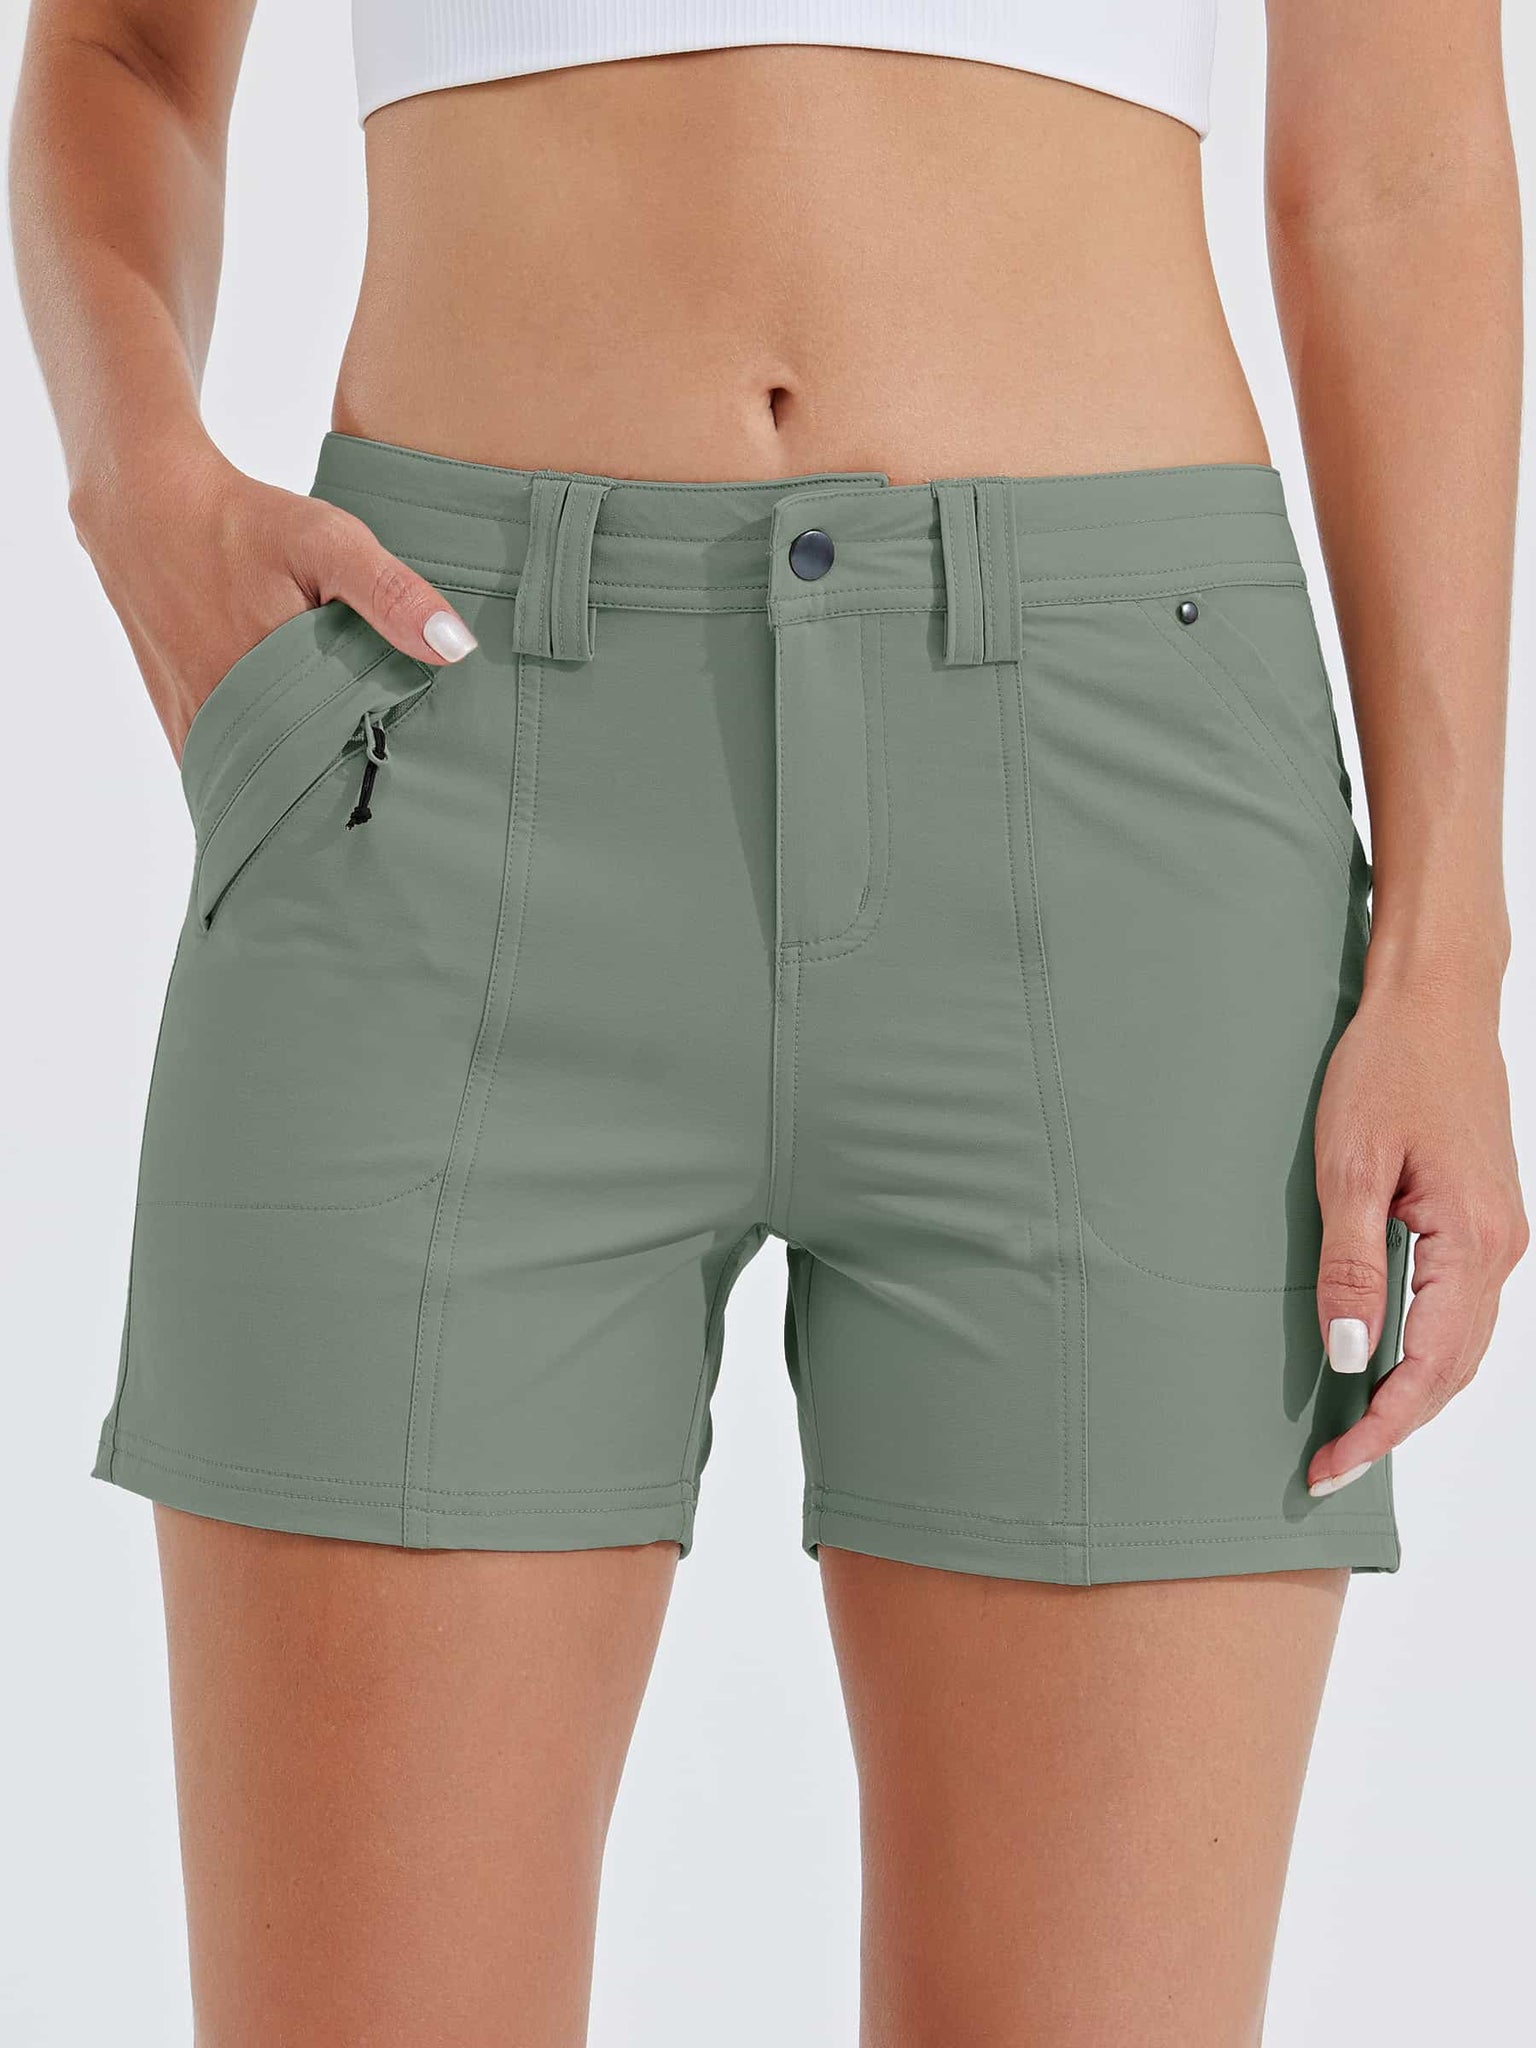 Women's Outdoor Golf Hiking Shorts_Green1